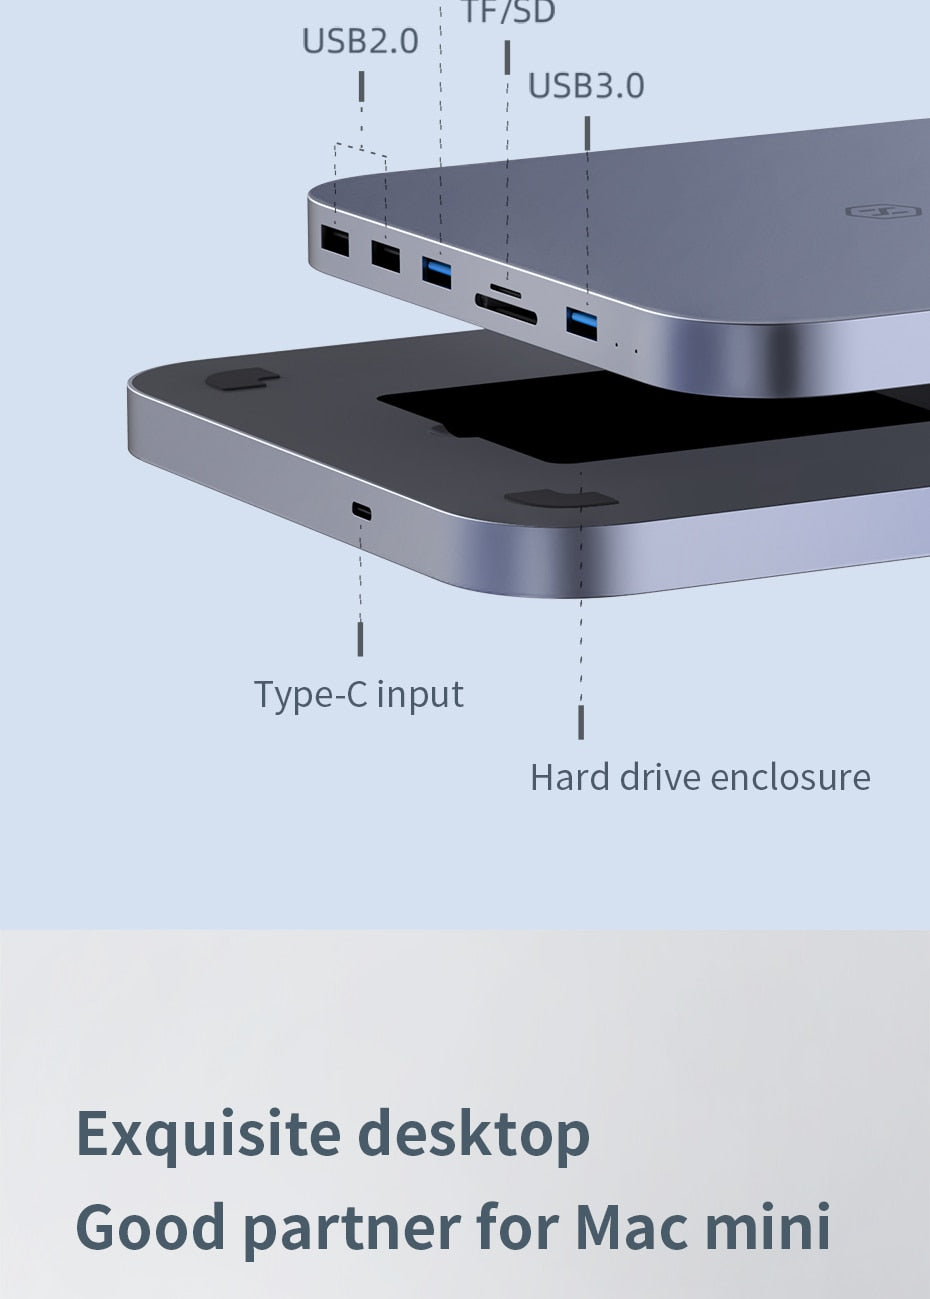 USB-C Hub with SATA Hard Drive Enclosure for Mac Mini or Mac Book Pro - Accessories - buy epic deals